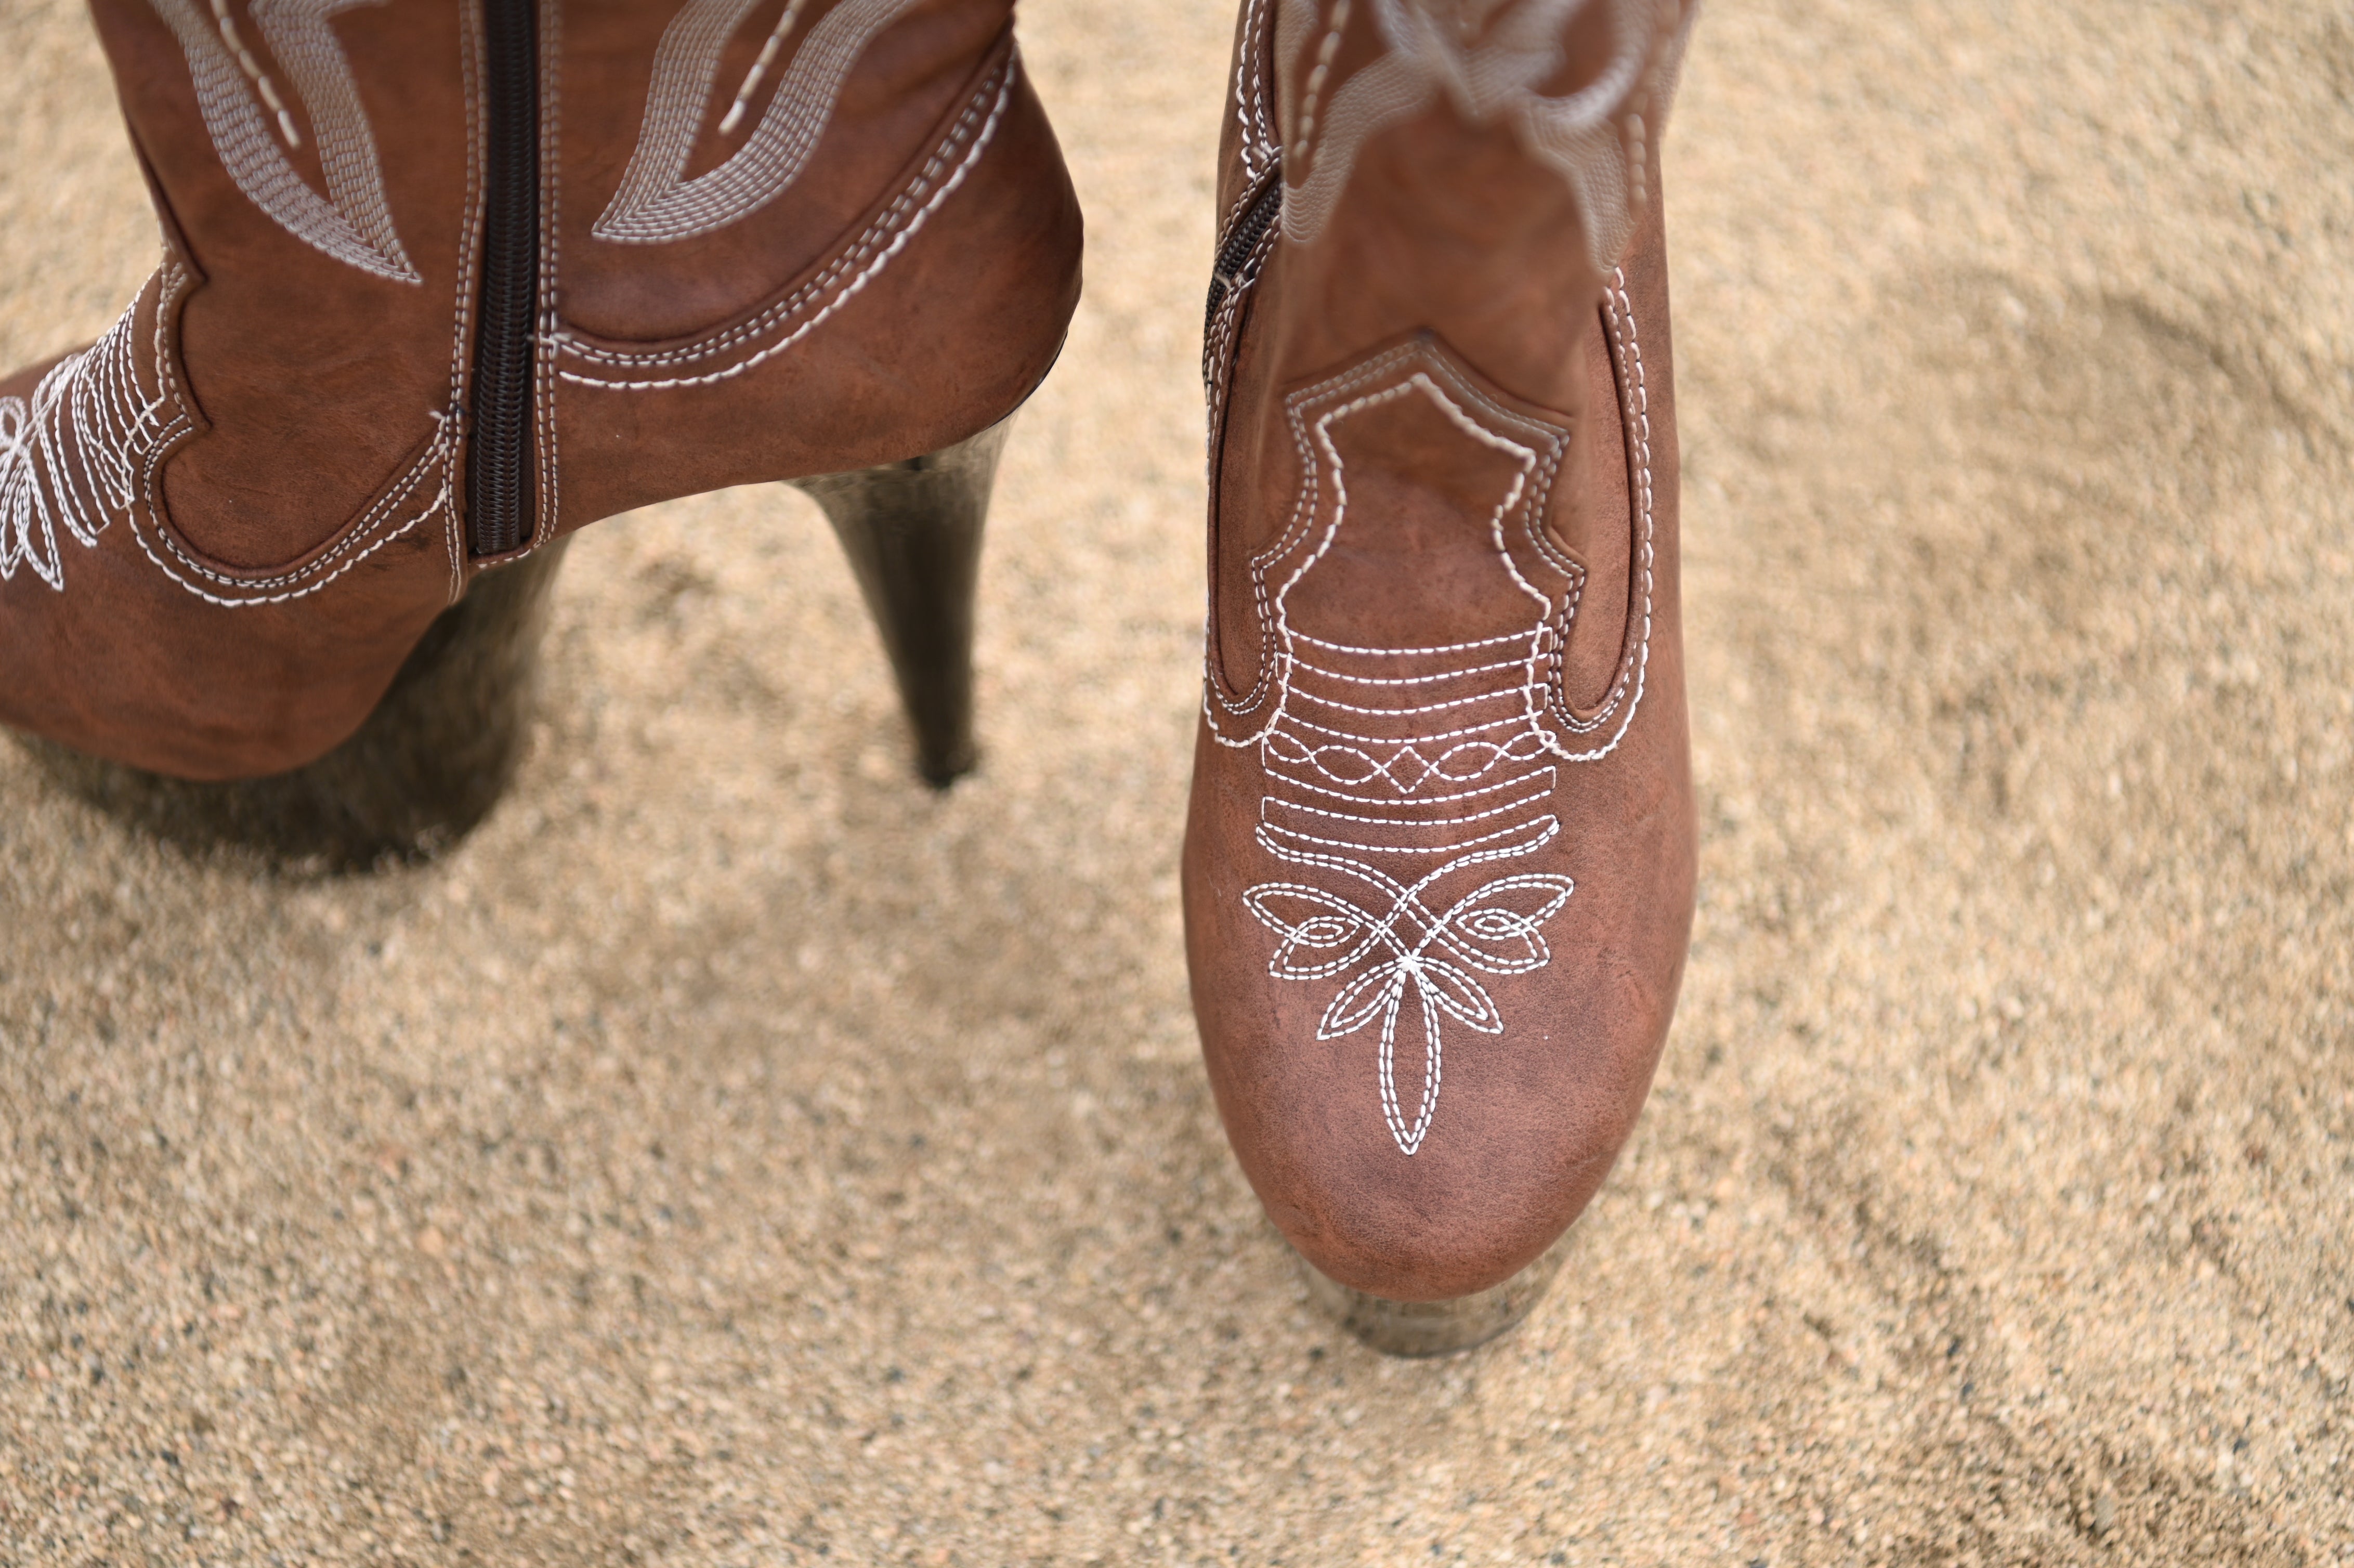 Western Hottie : Boots